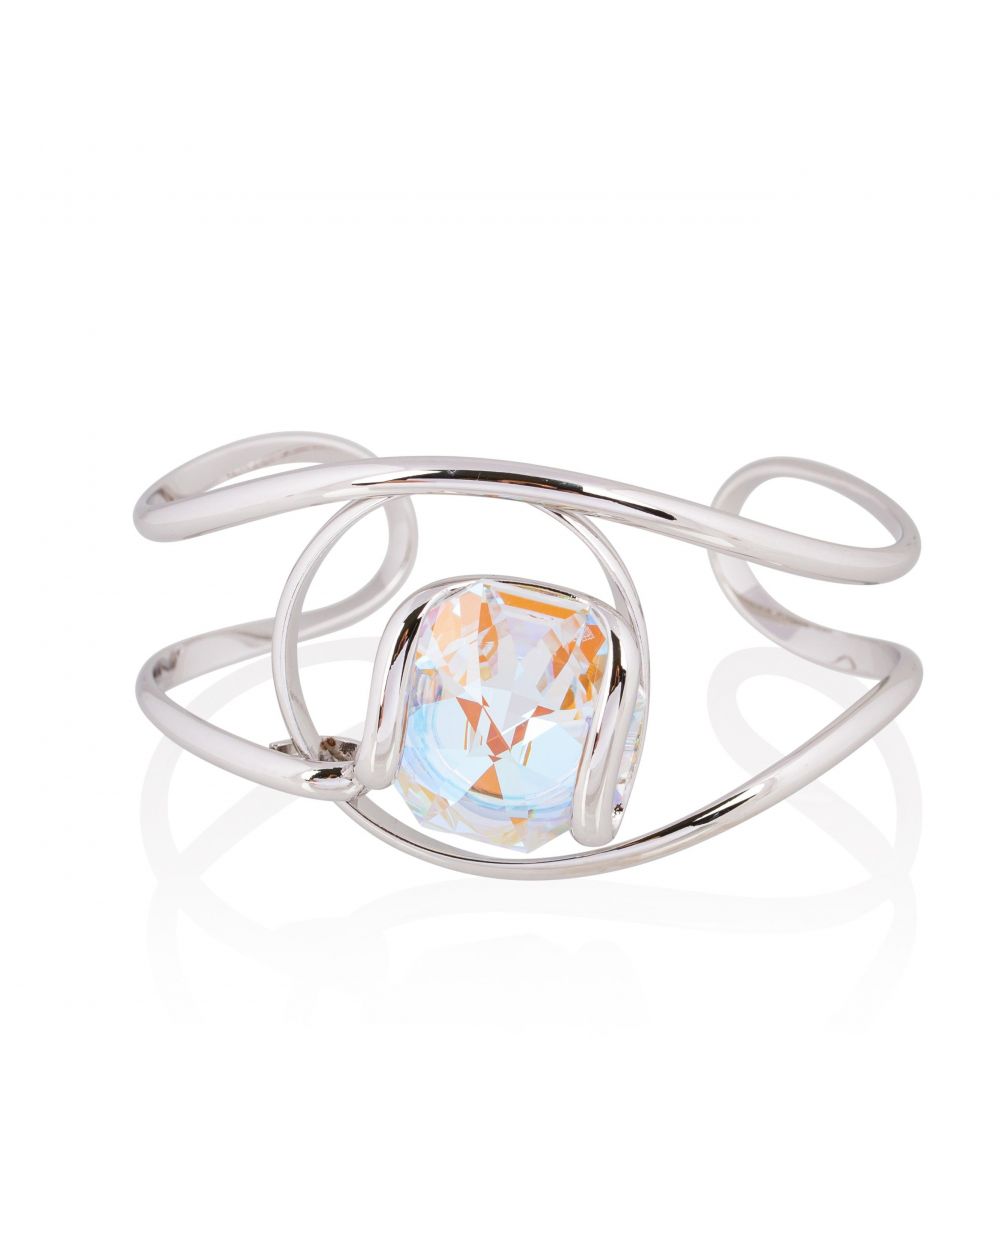 Andrea Marazzini bijoux - Bracelet cristal Swarovski  Ocatagon AB